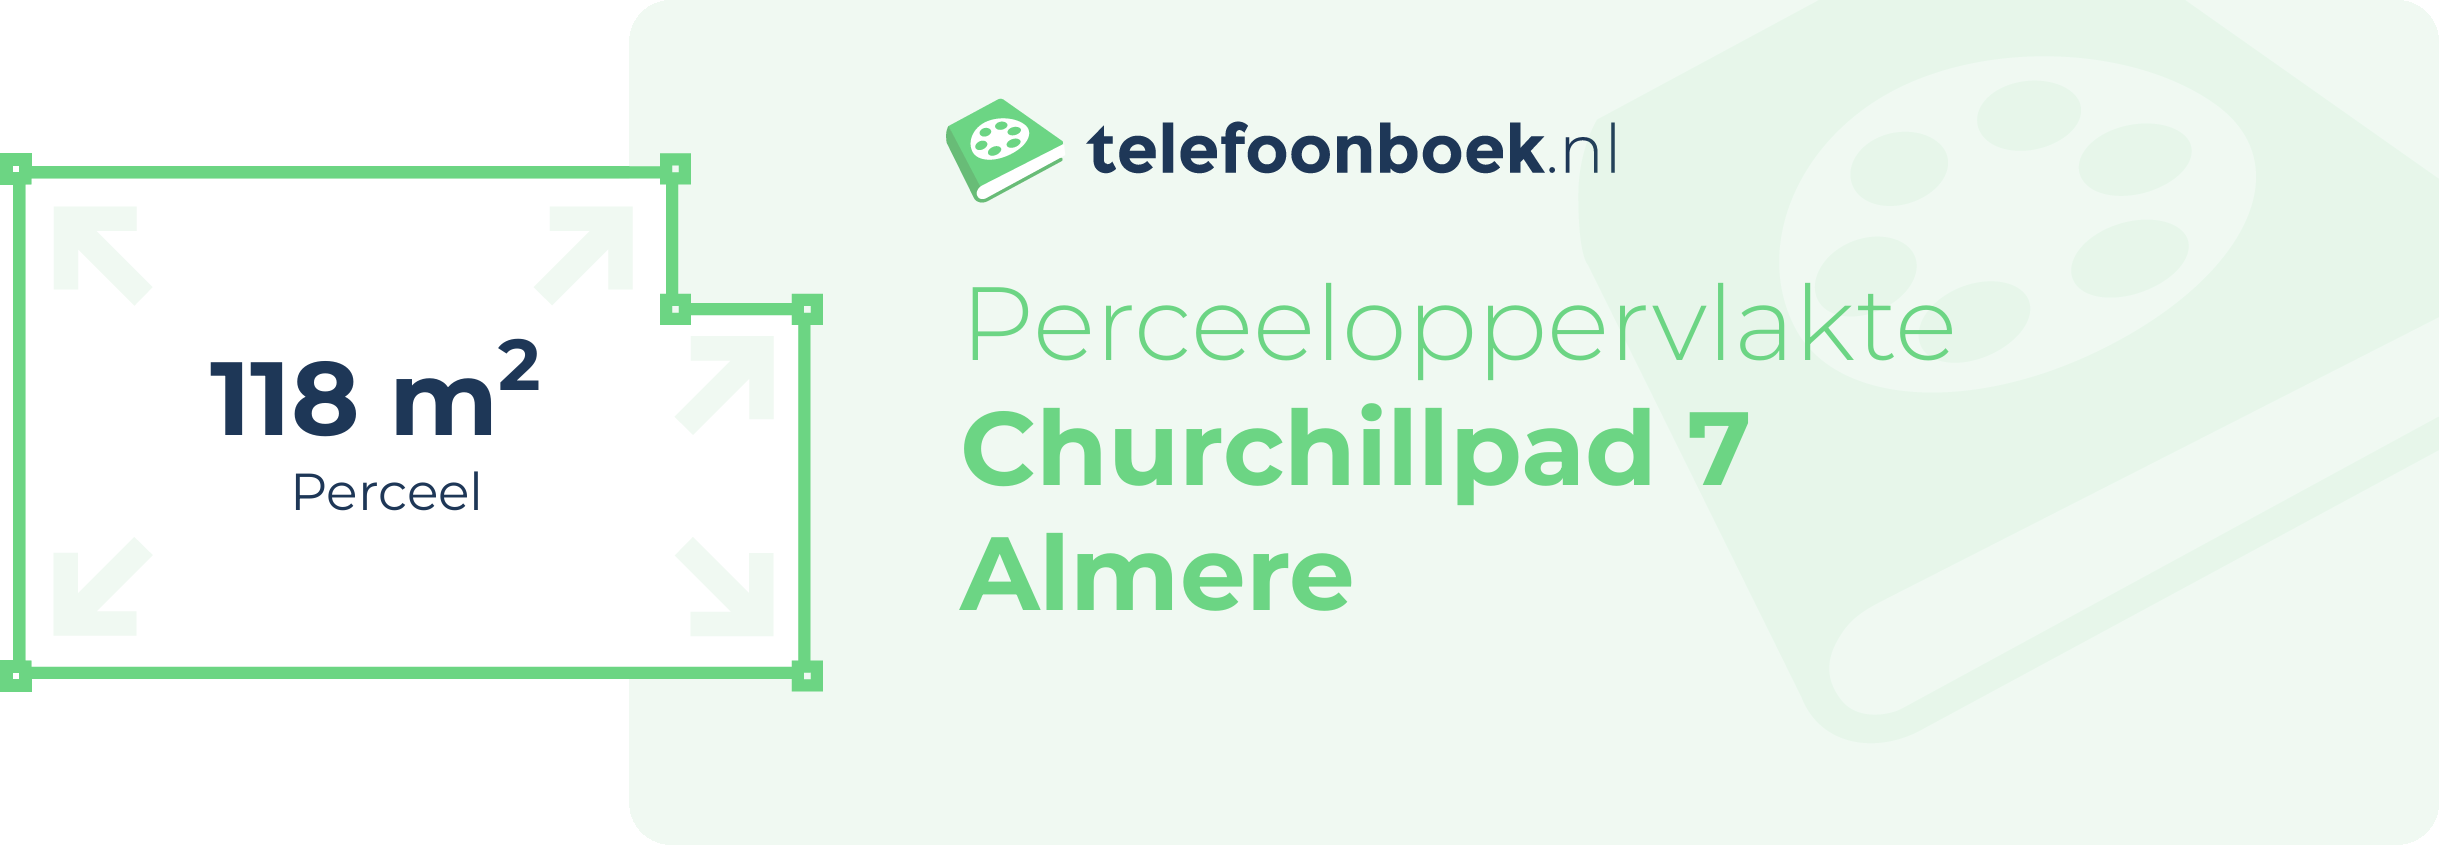 Perceeloppervlakte Churchillpad 7 Almere